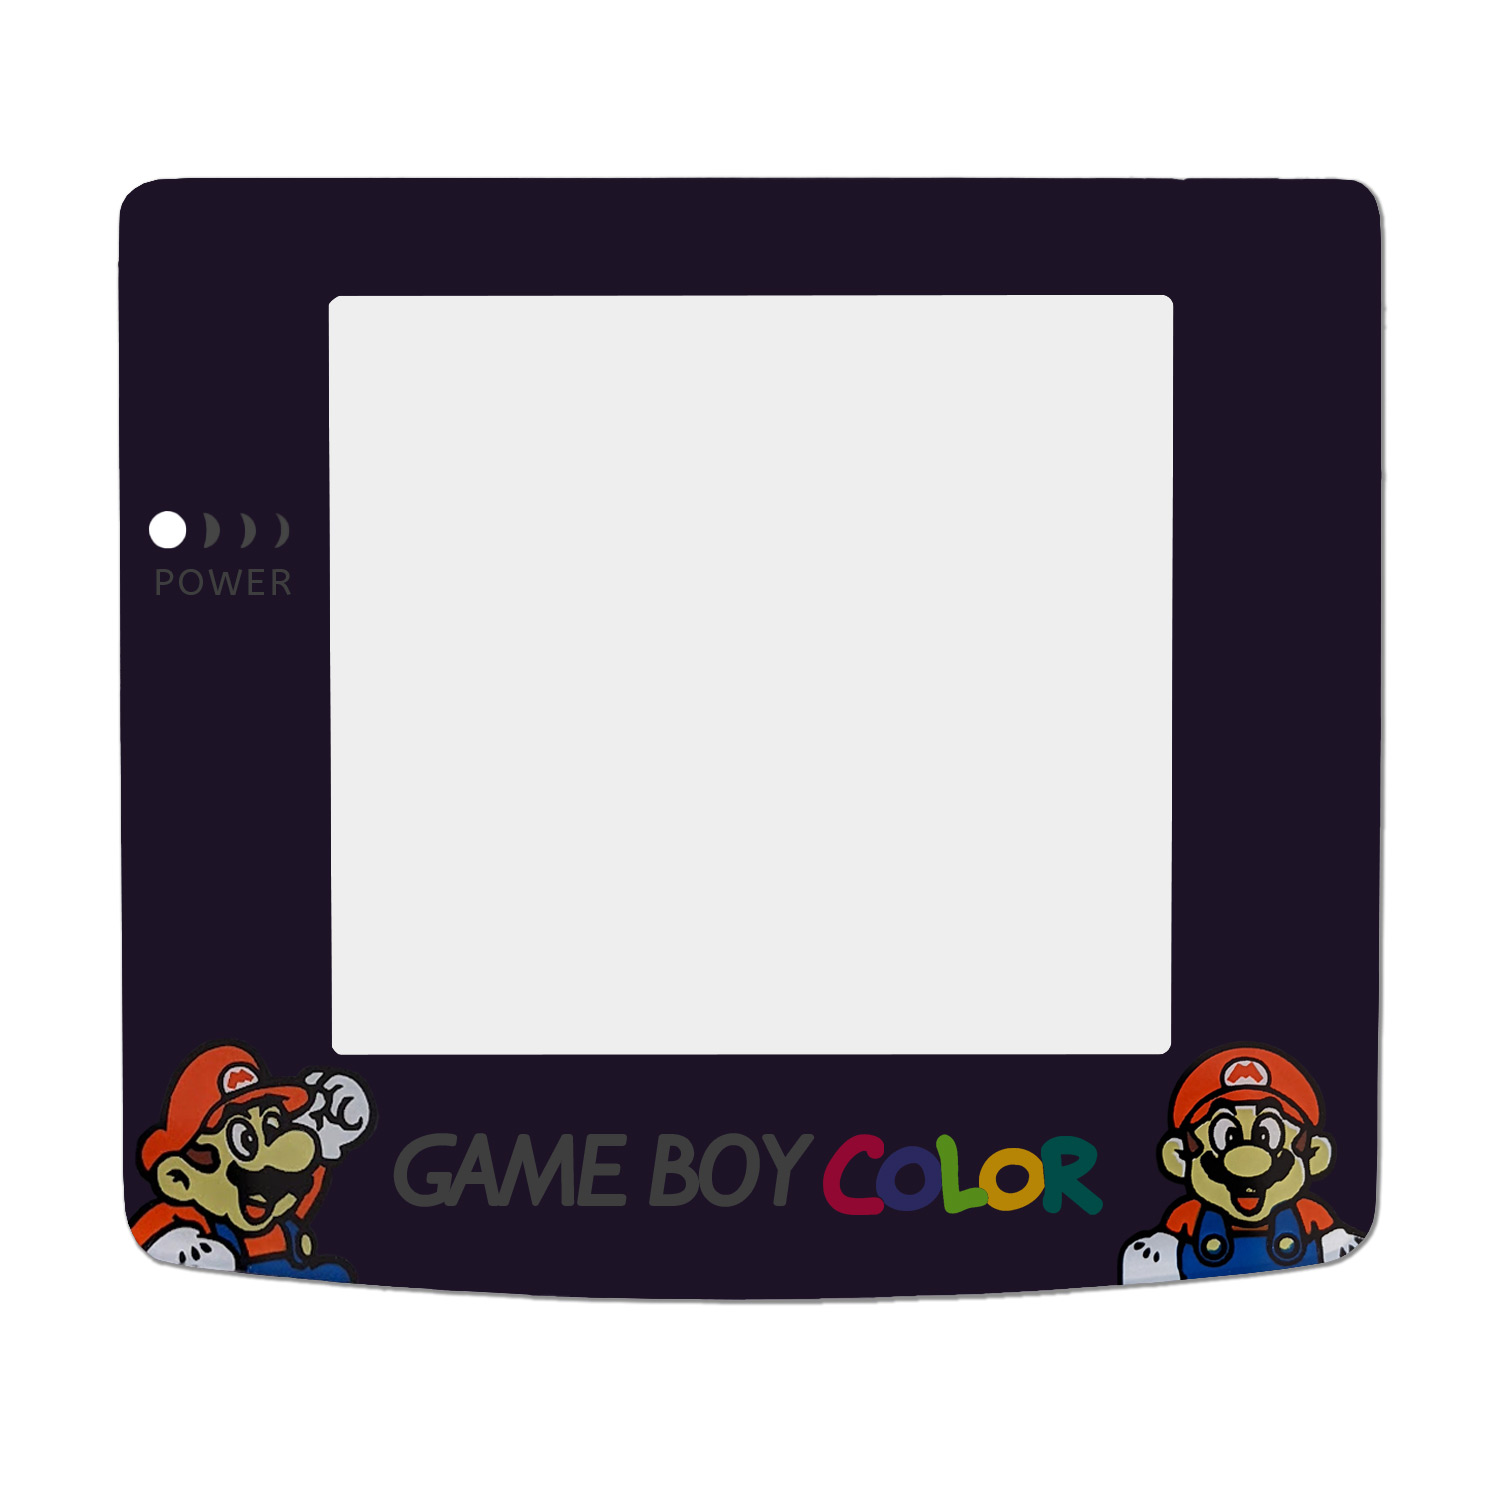 Display Scheibe (Mario) für Game Boy Color